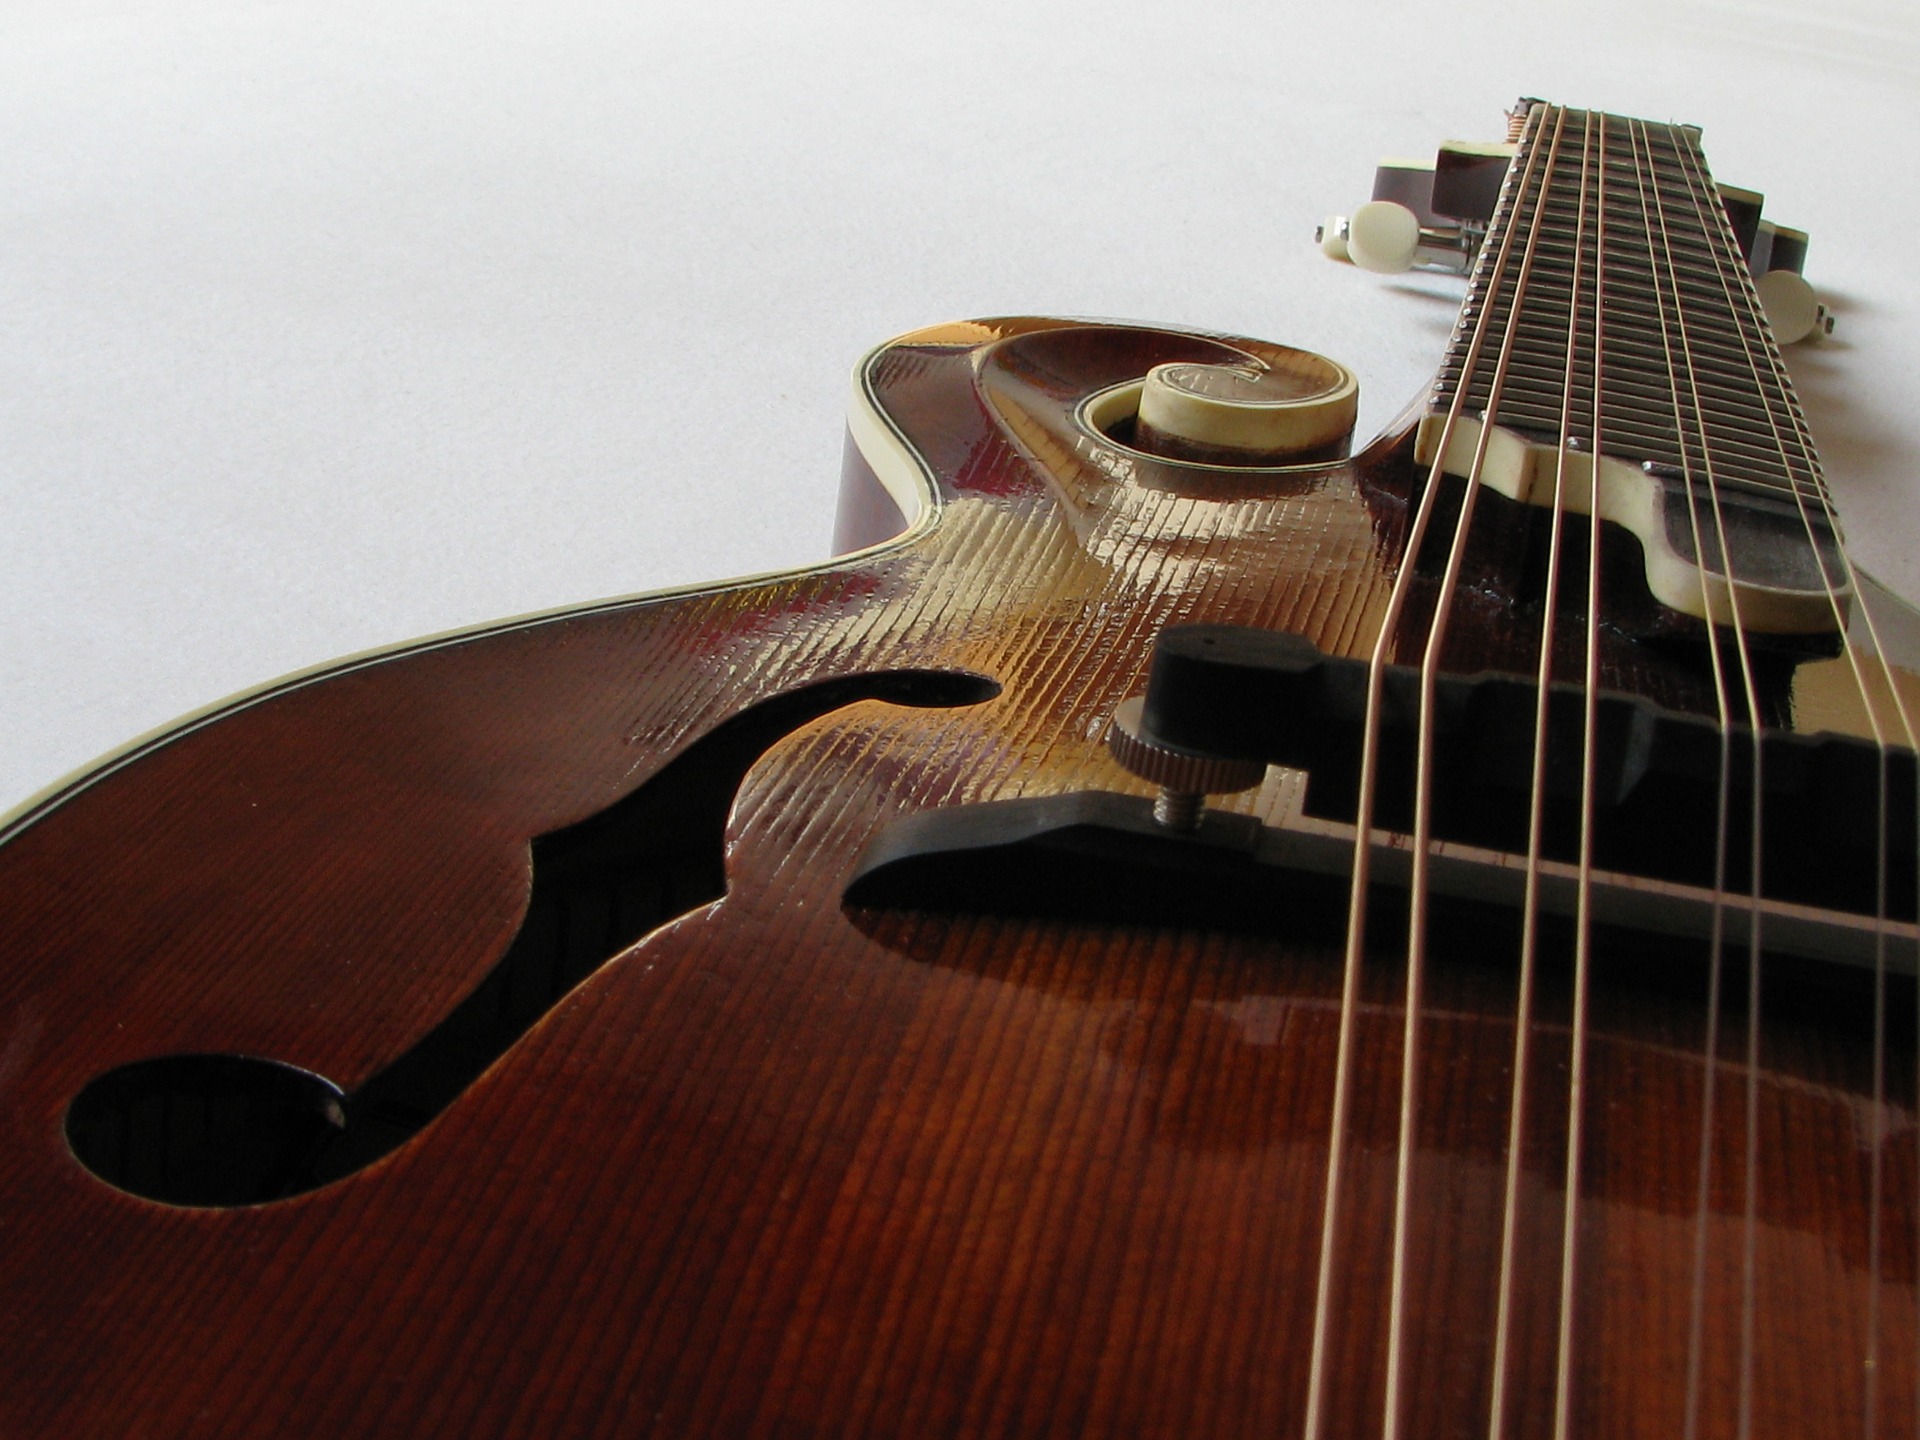 Best cheap mandolin for beginners